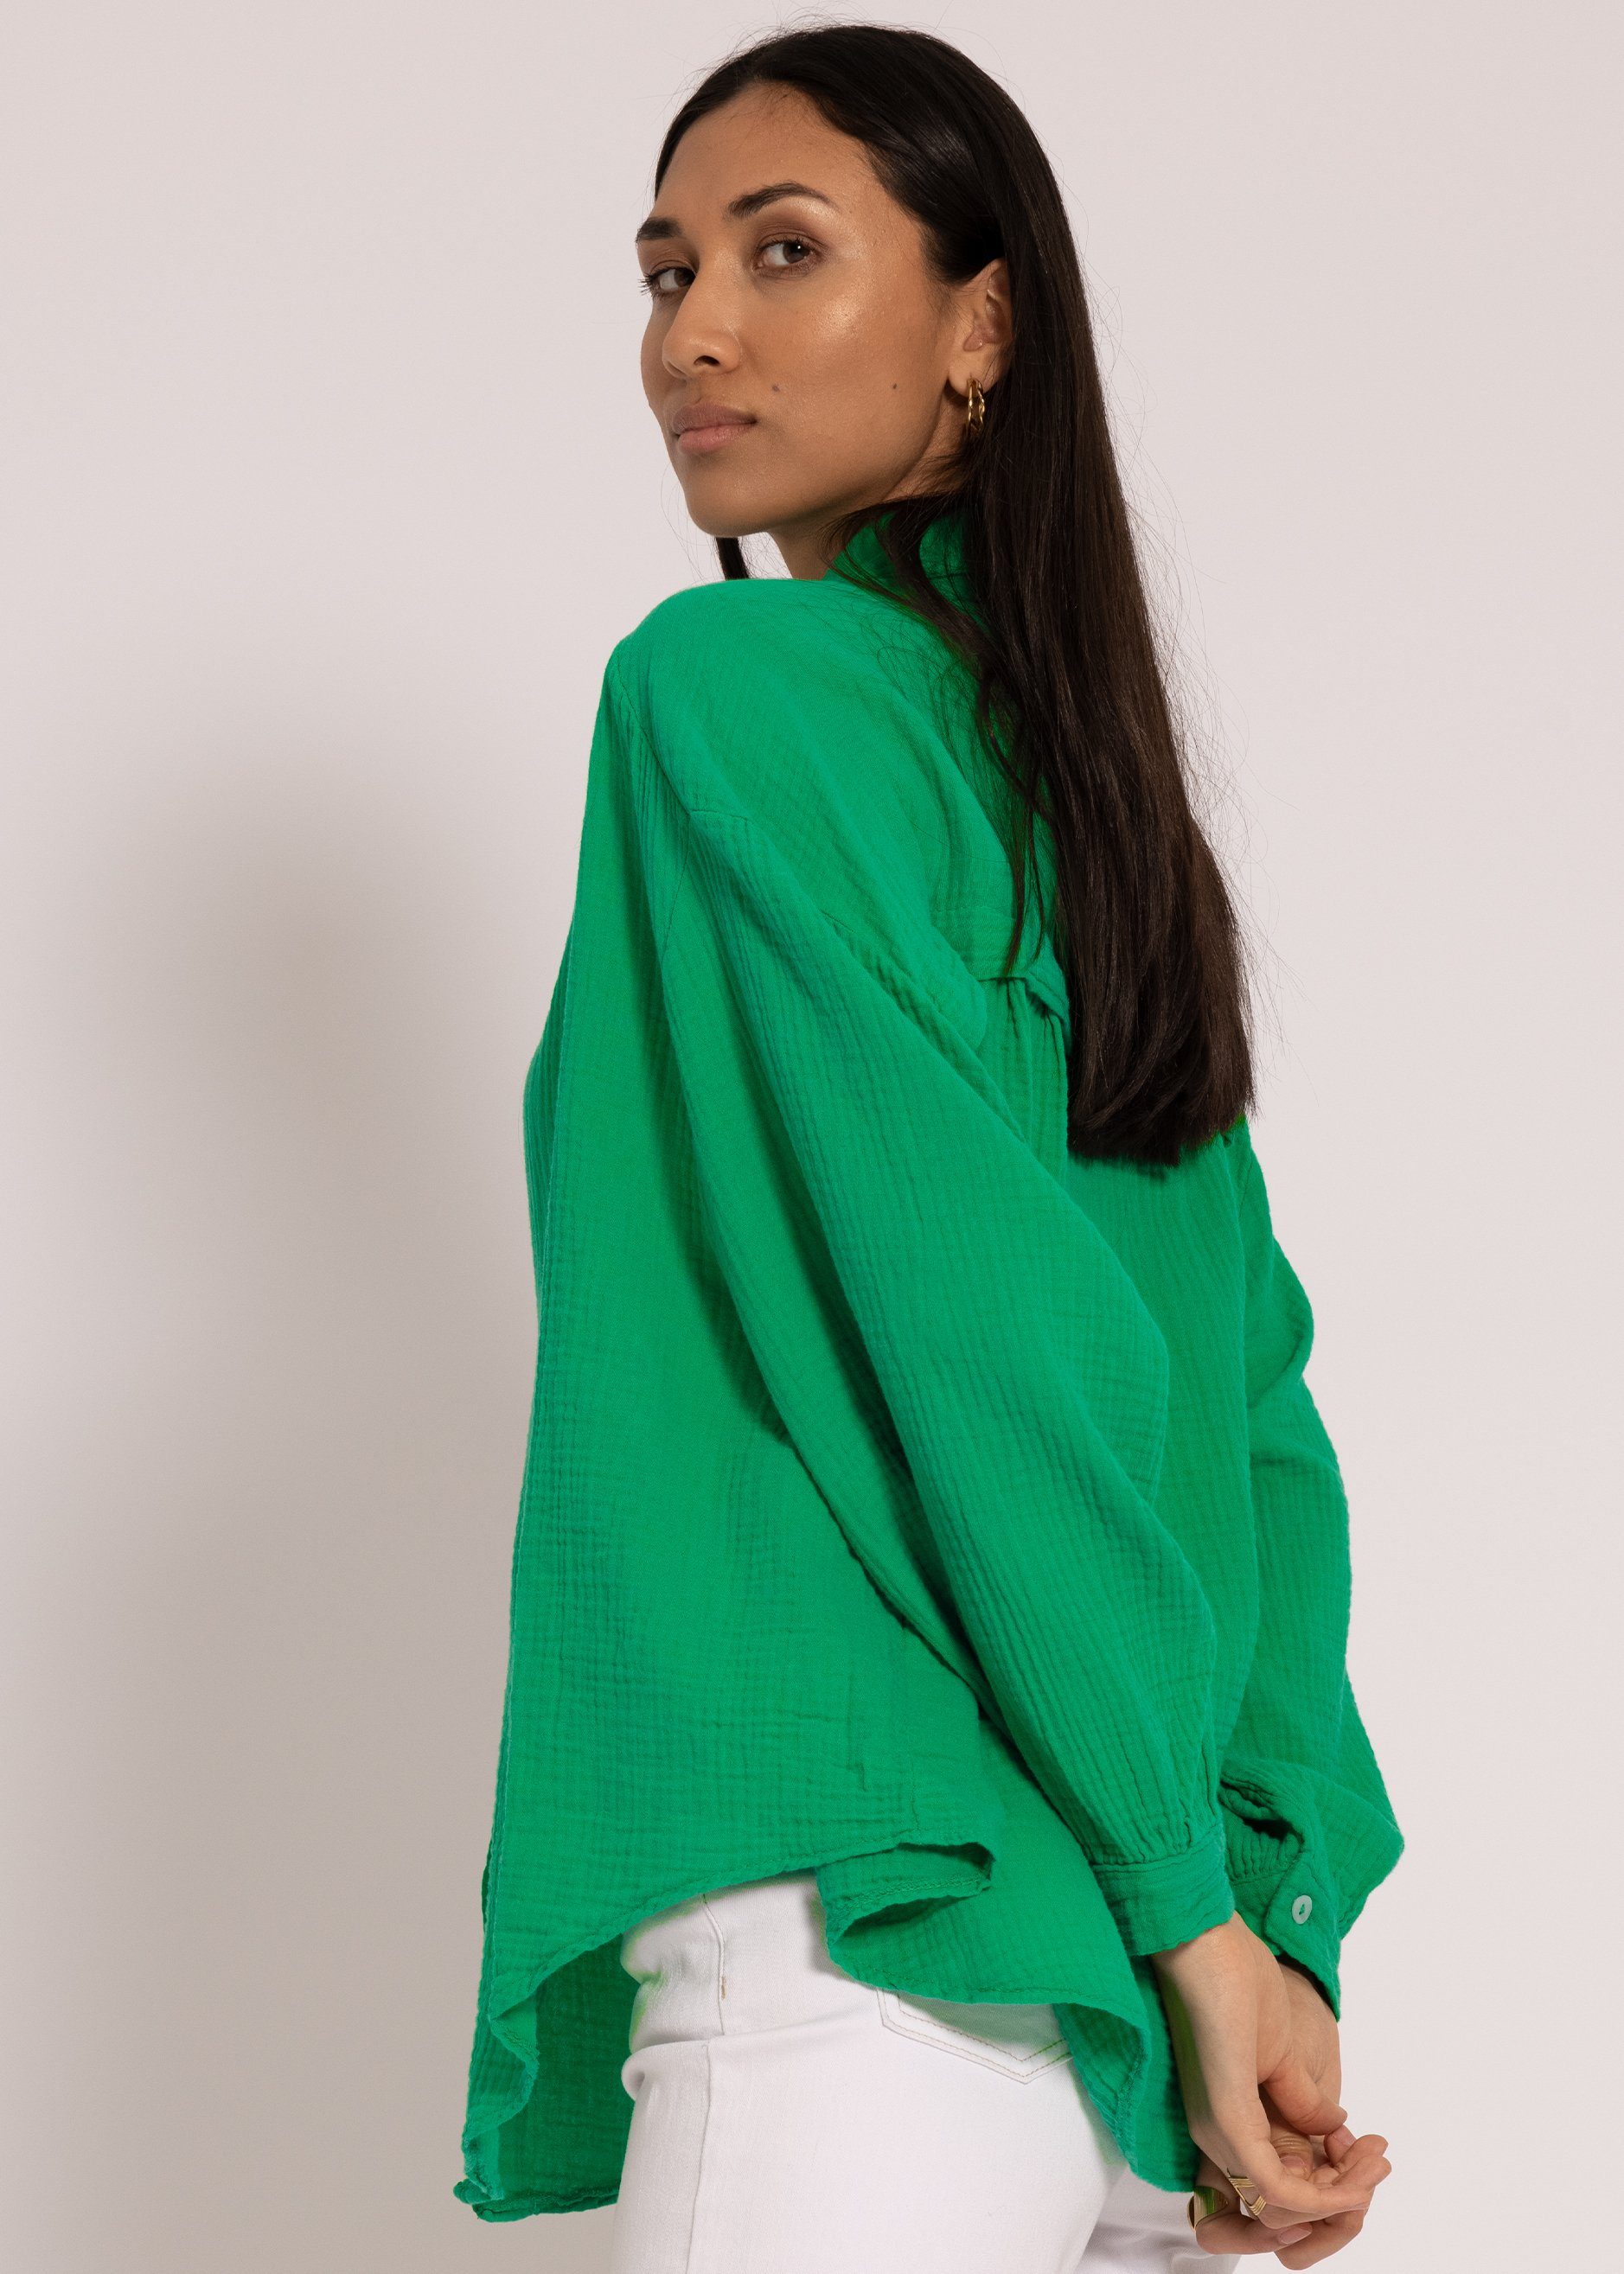 SASSYCLASSY Longbluse Oversize Musselin Baumwolle One Bluse Damen V-Ausschnitt, aus mit 36-48) Hemdbluse Frühlingsgrün Langarm lang Size (Gr